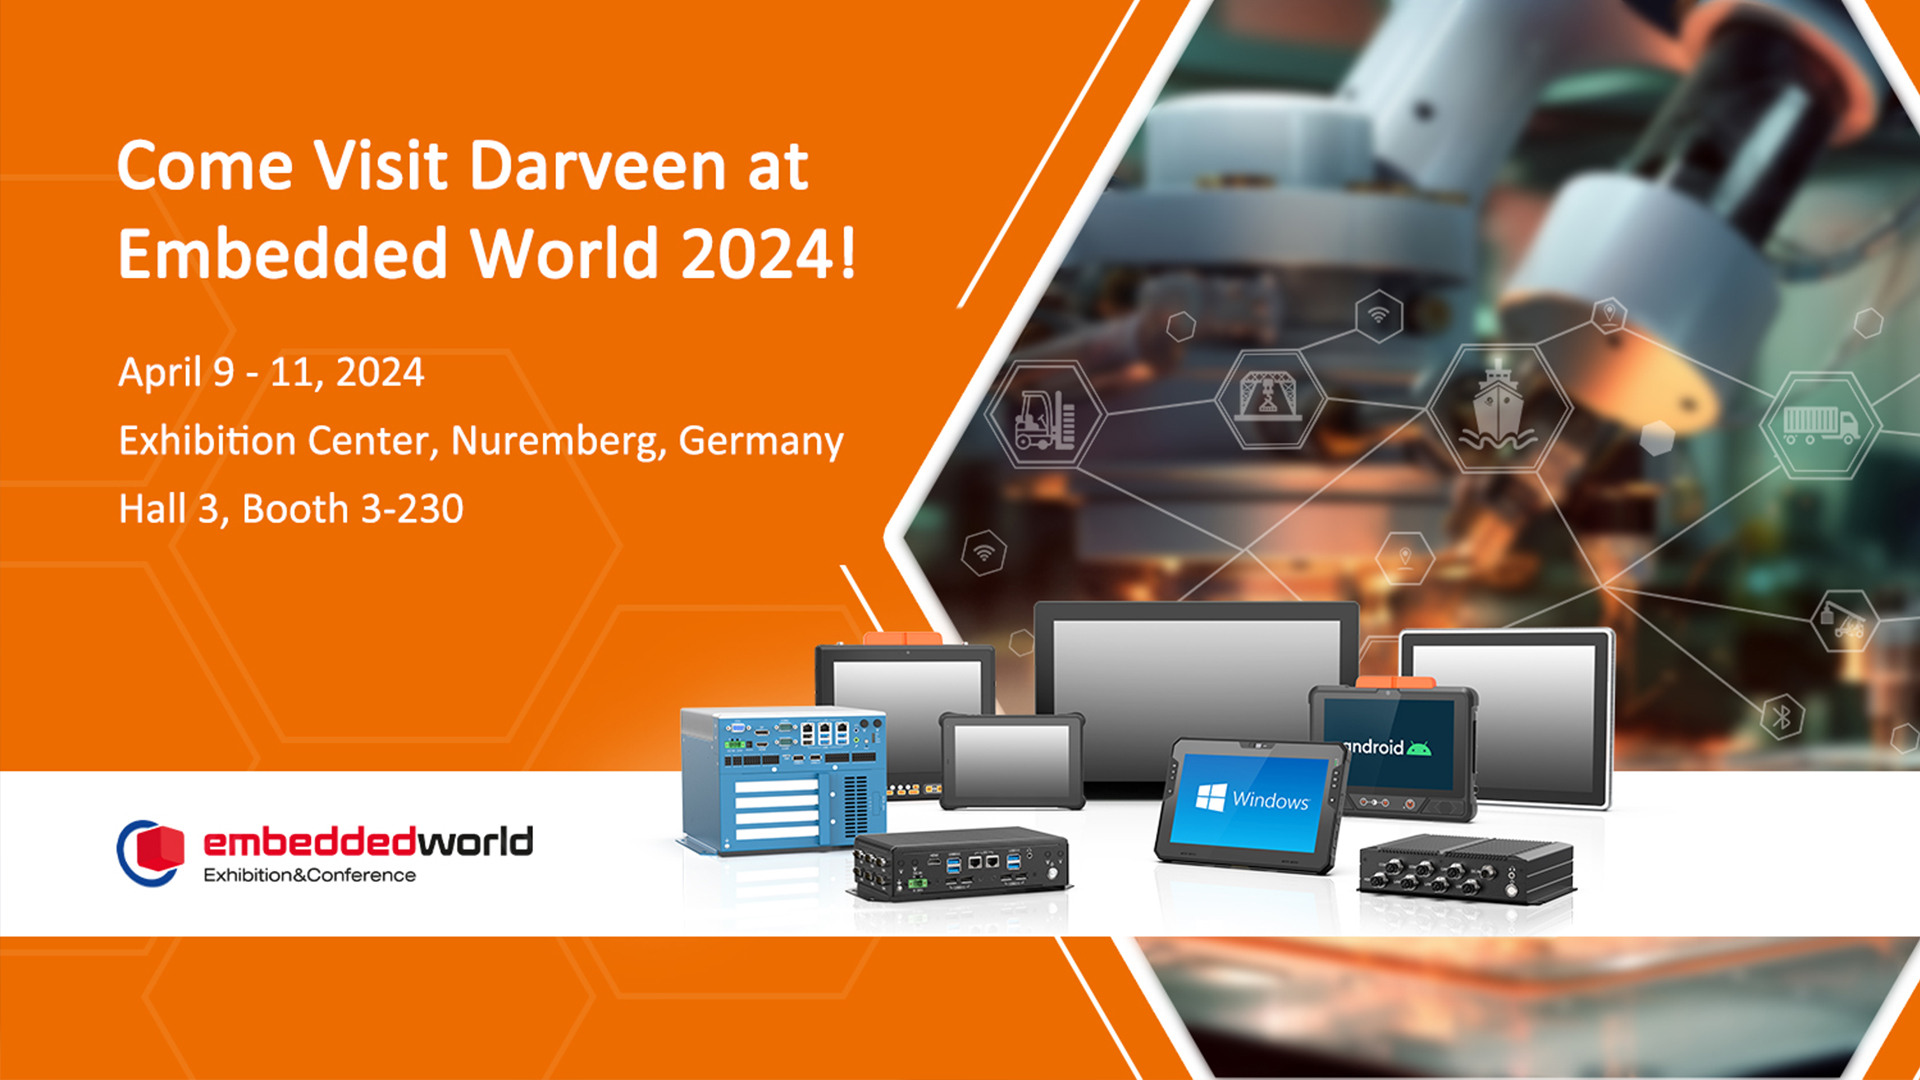 Come Visit Darveen at embedded world 2024!